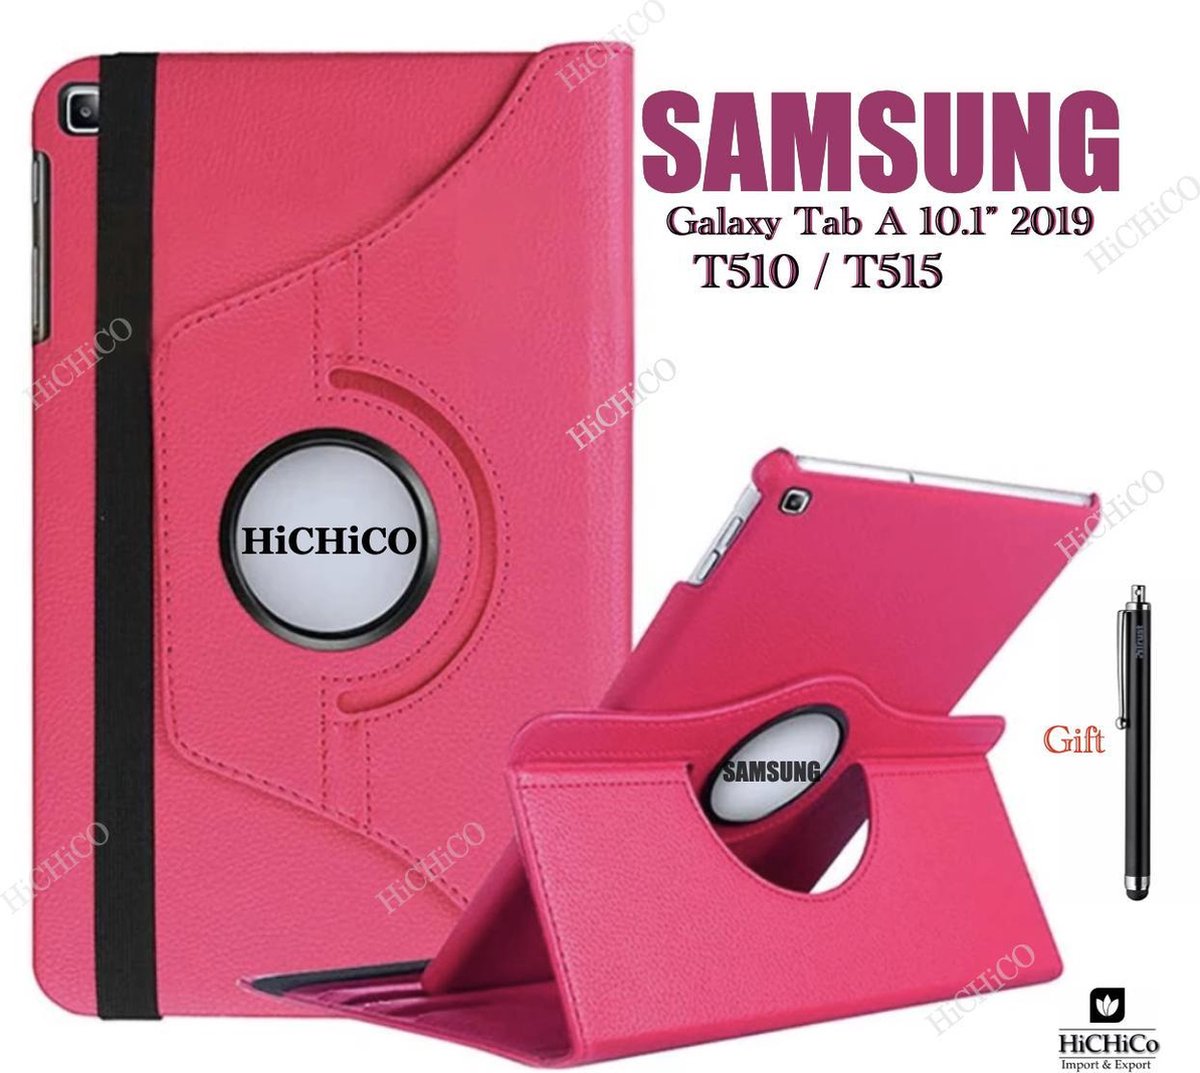 HiCHiCO Tablet Hoes voor Samsung Galaxy Tab A 10.1” 2019, Galaxy Tab T510 / T515 Hoesje, 360 Graden Draaibaar Tablet Case Rose met Stylus Pen